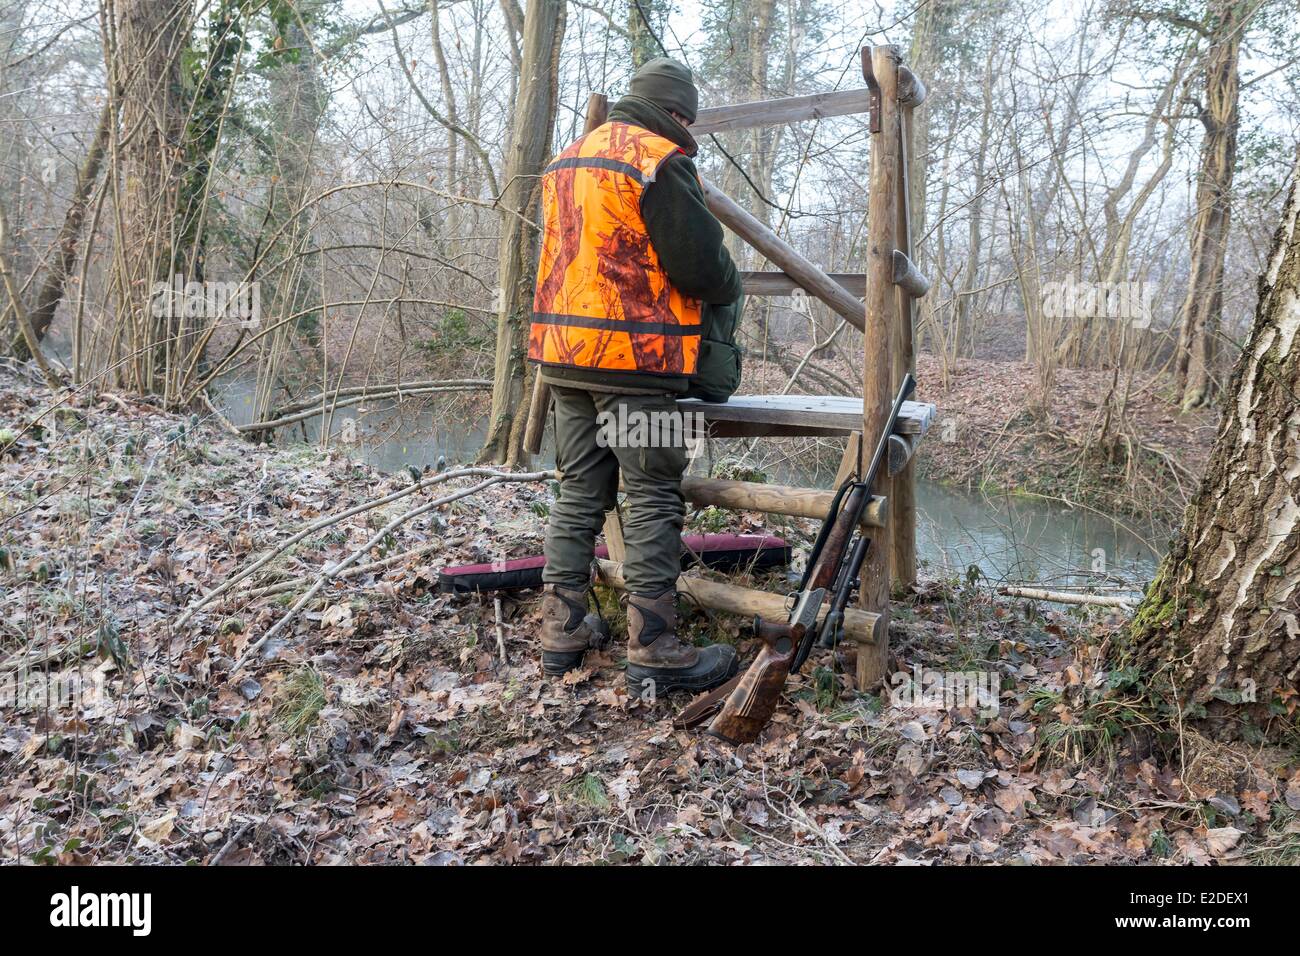 France Bas Rhin Rhin la chasse au gros gibier des forêts Photo Stock - Alamy